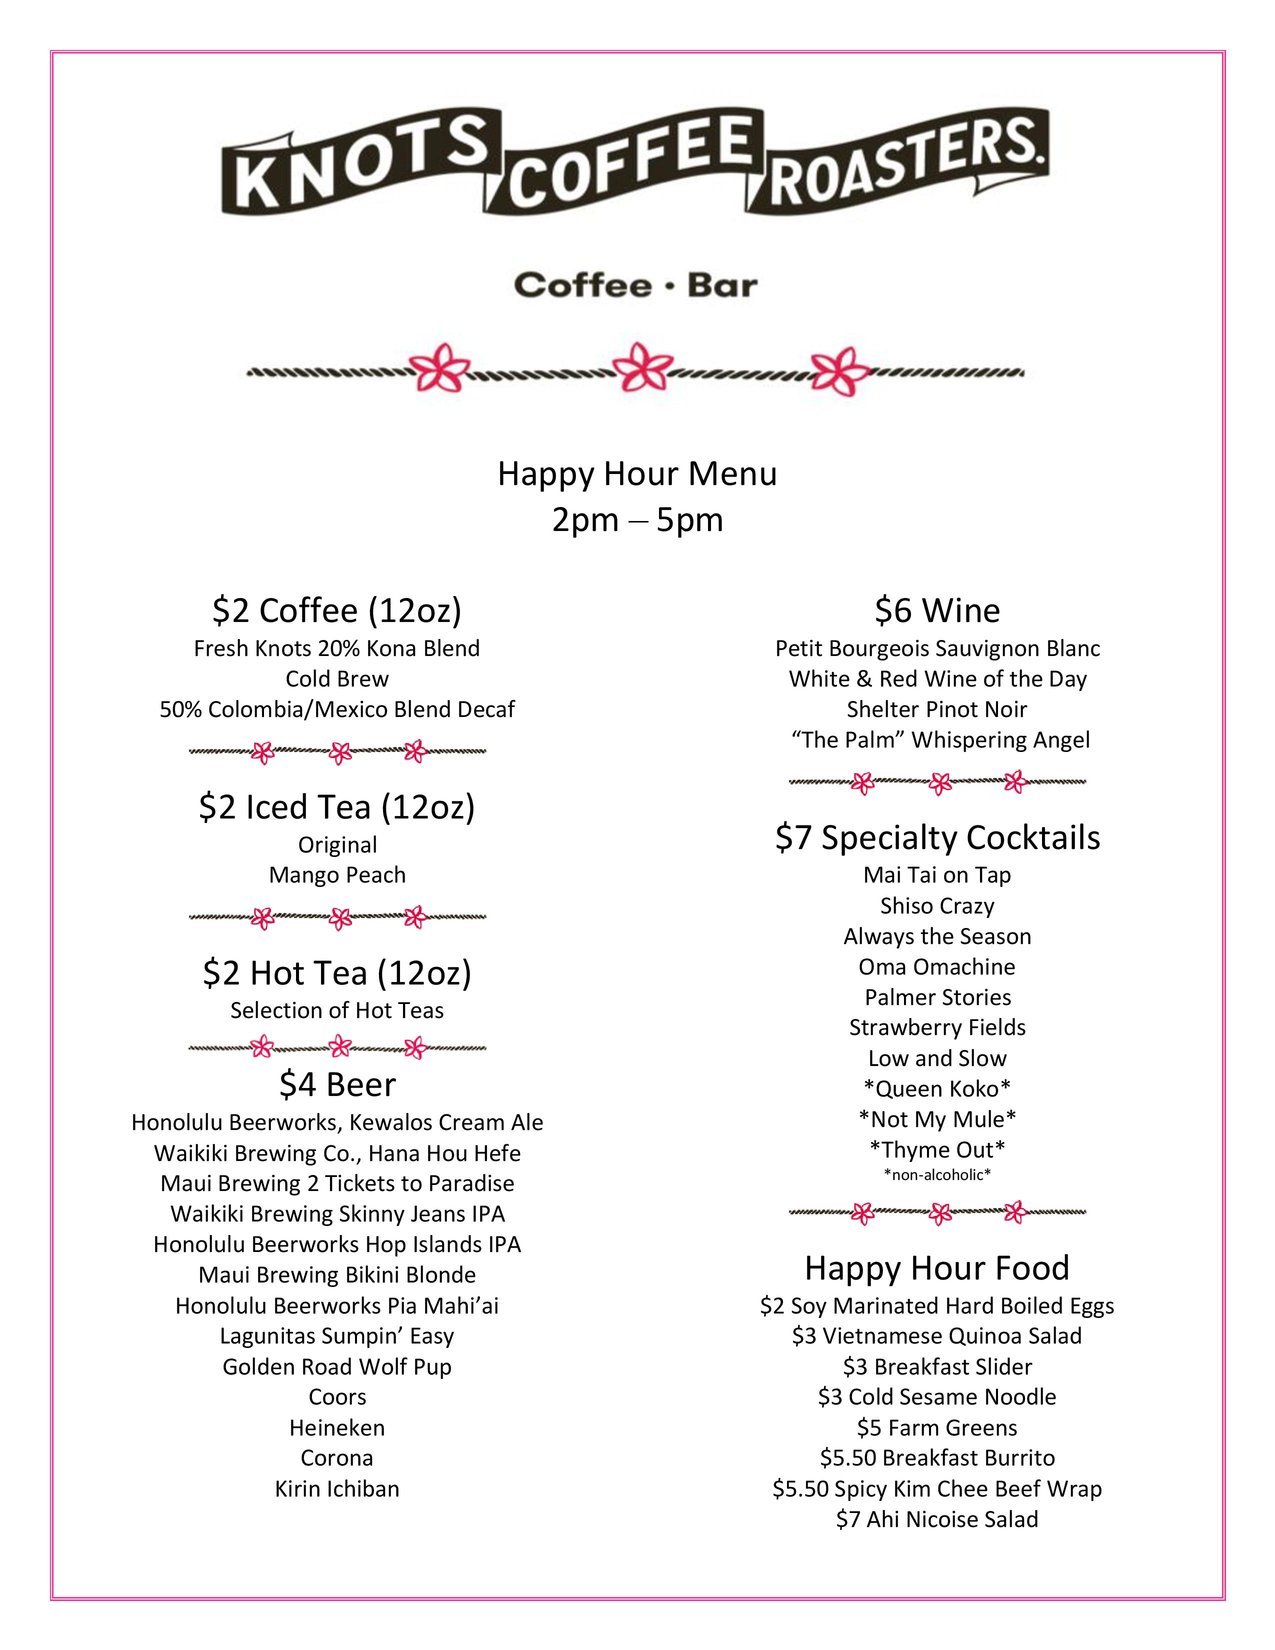 Knots Coffee Roasters Happy Hour menu